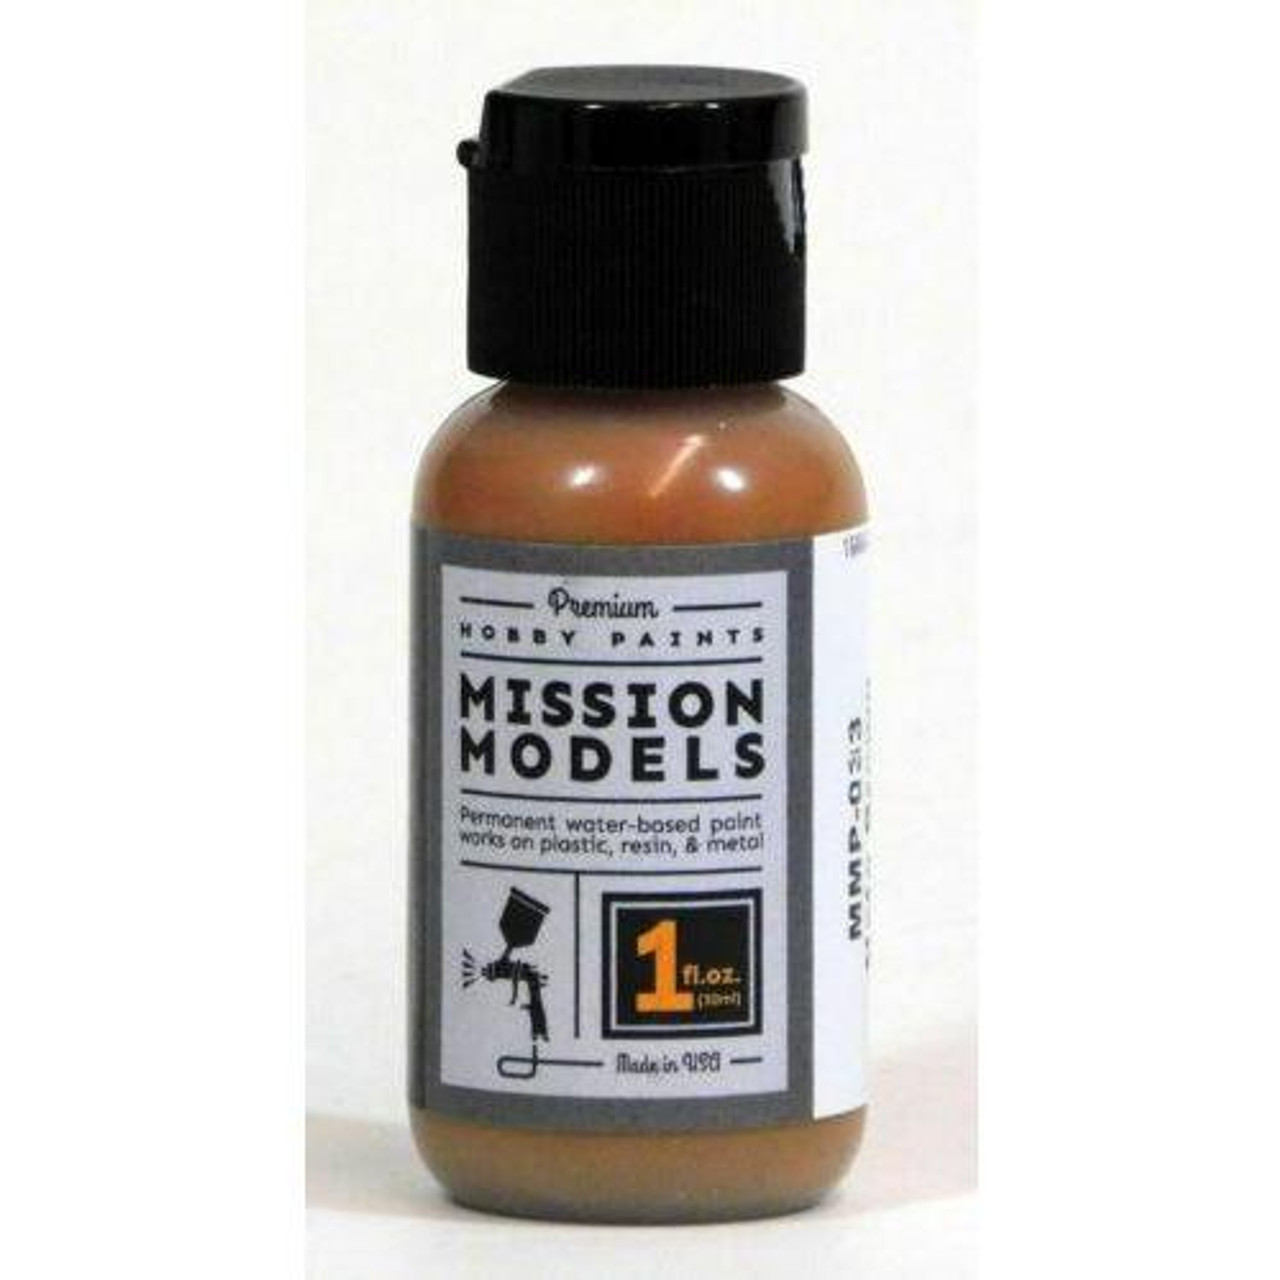 Mission Models MIOMMP-033 Acrylic Model Paint 1oz Bottle, NATO Brown